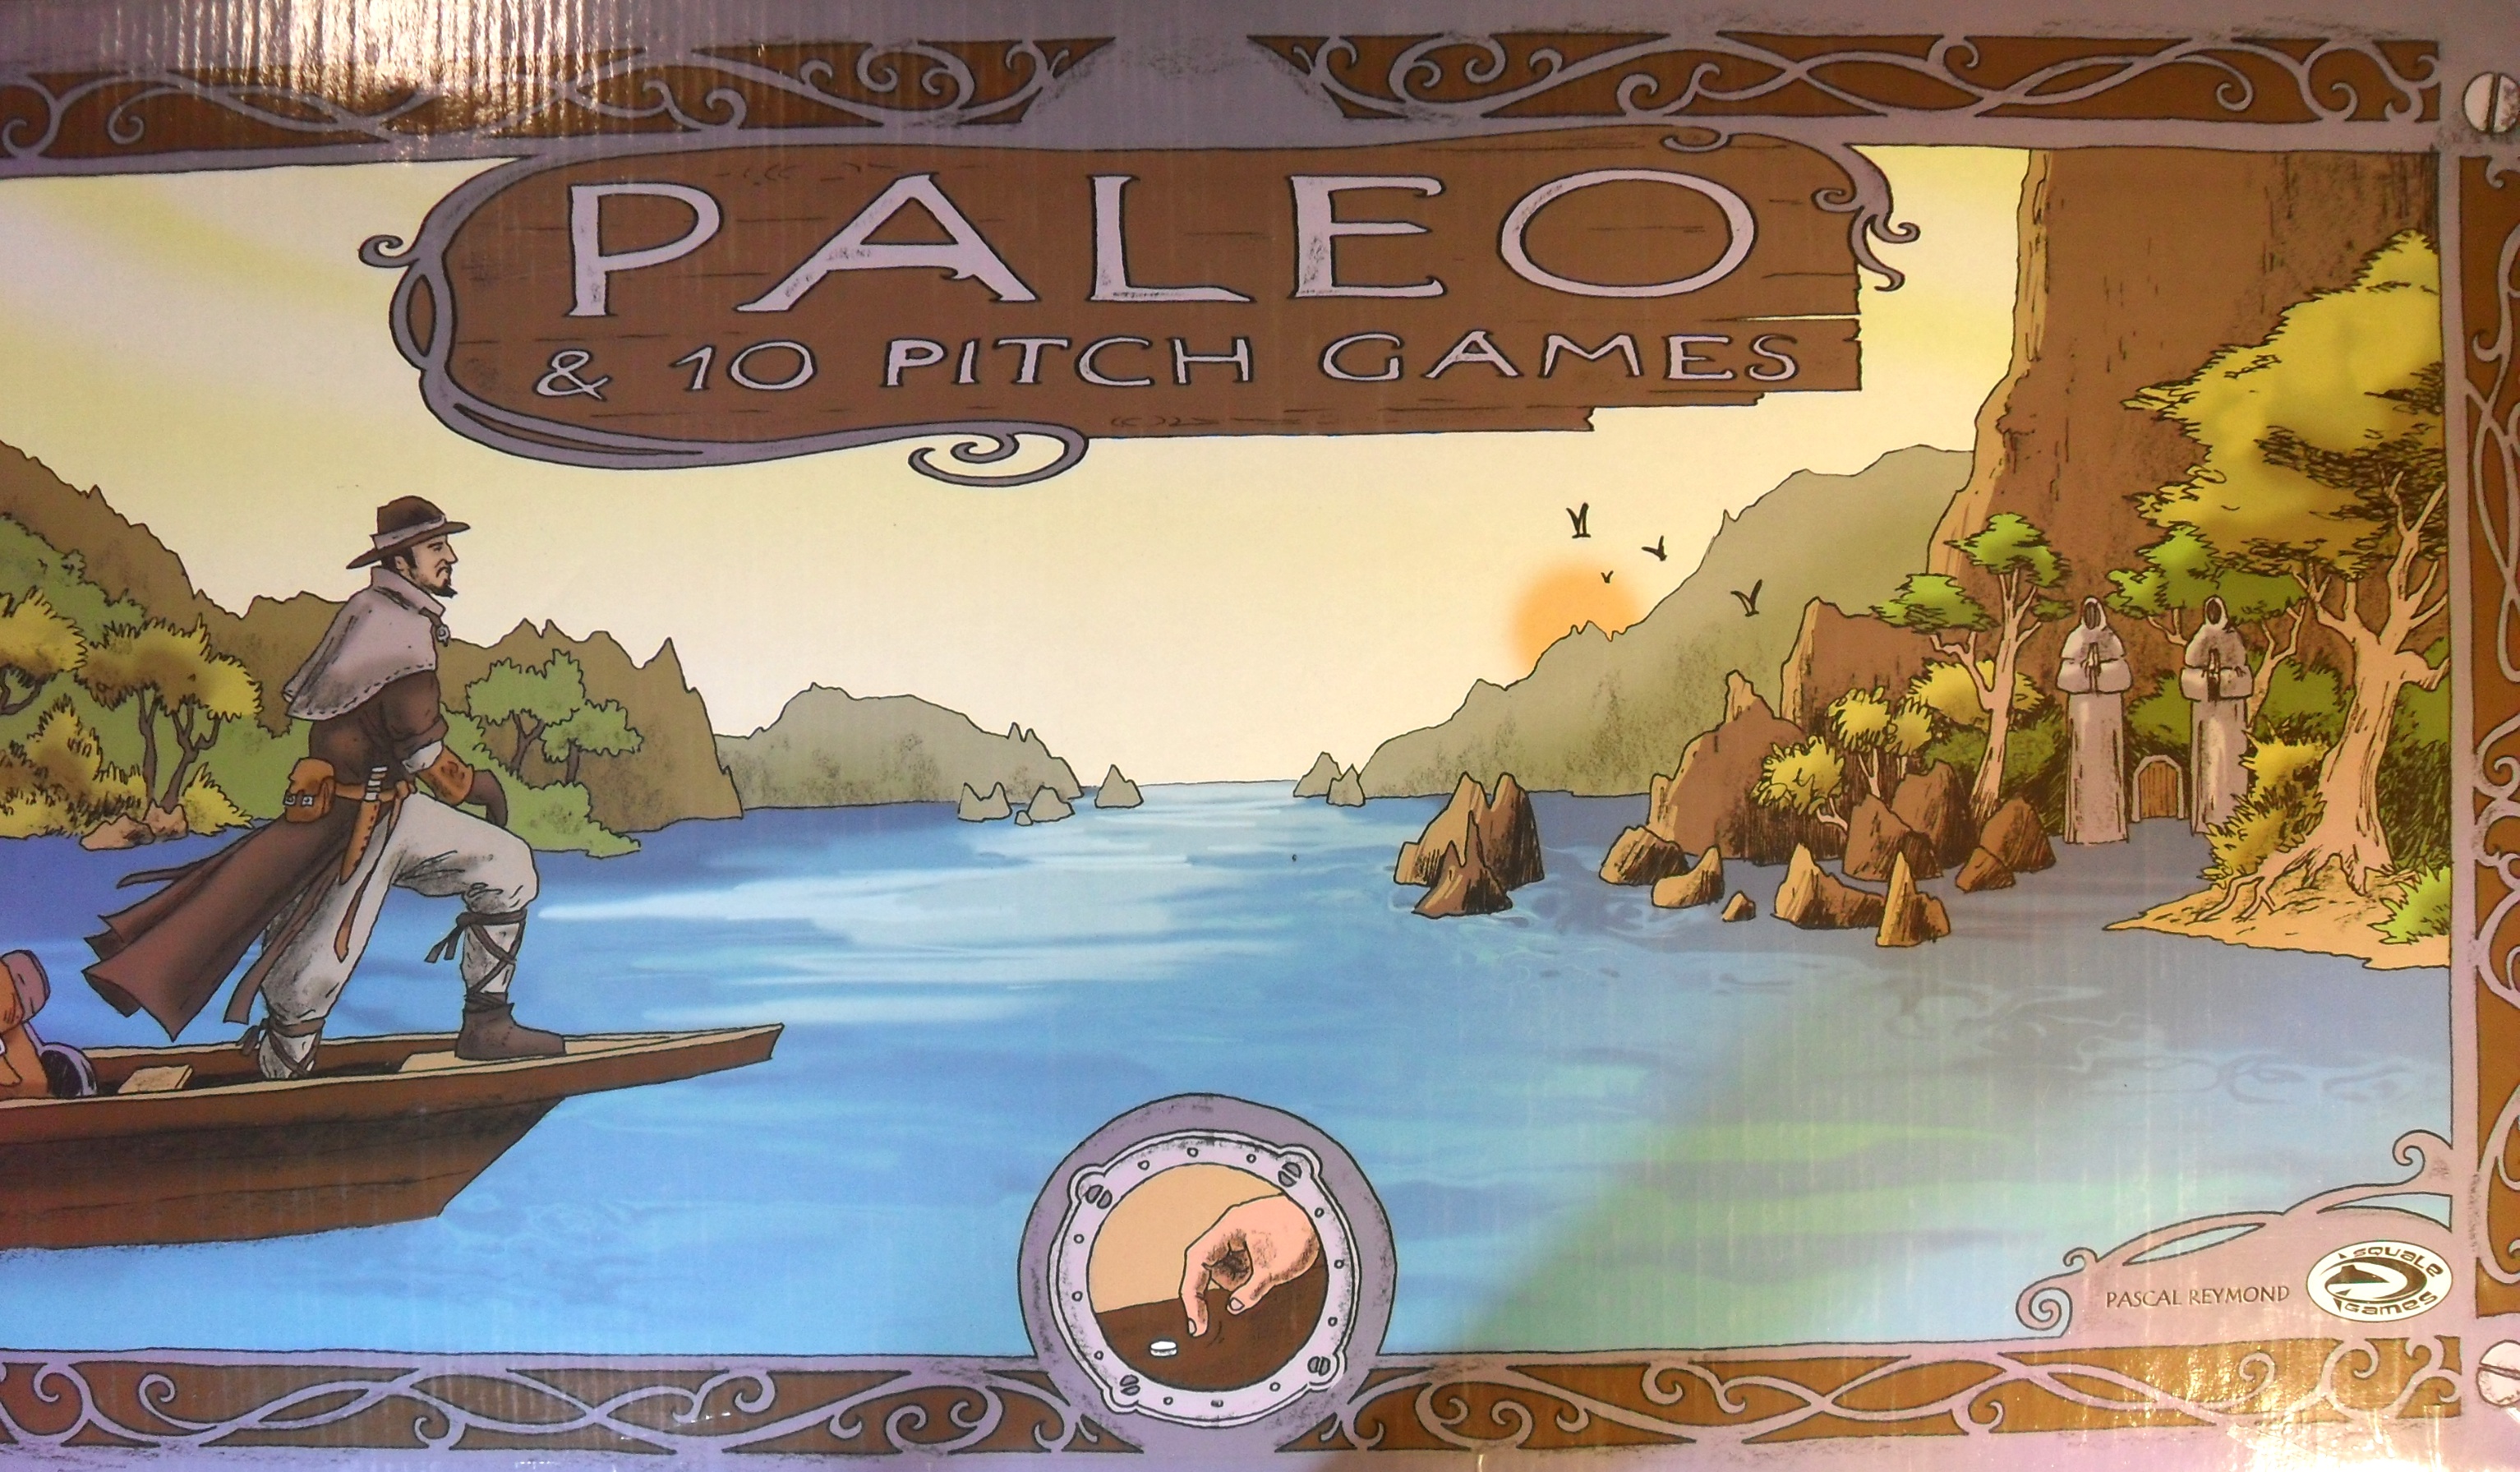 Paleo & 10 Pitch Games